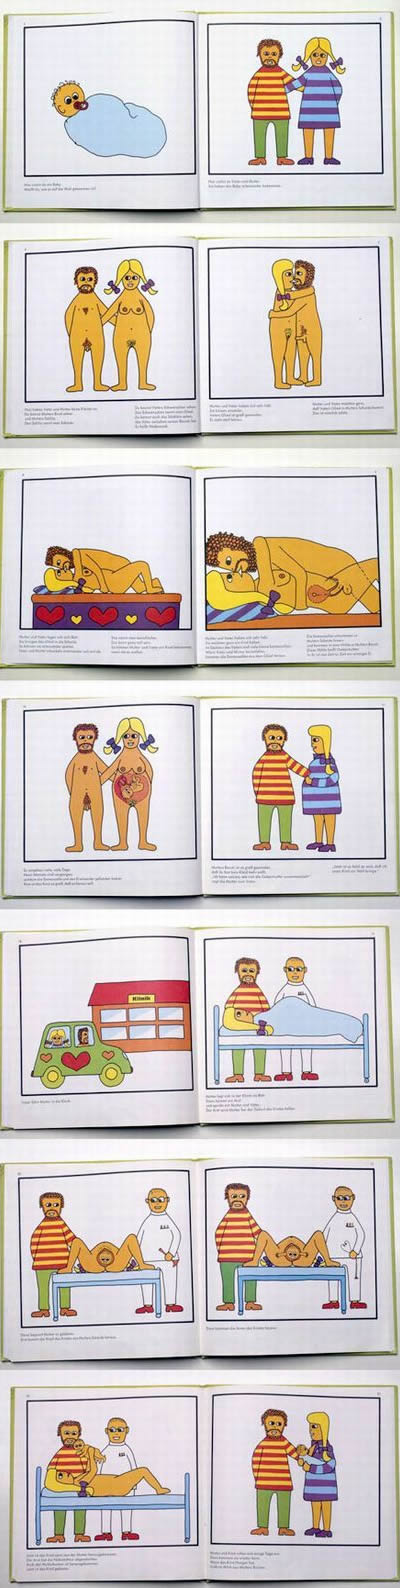 sex education book